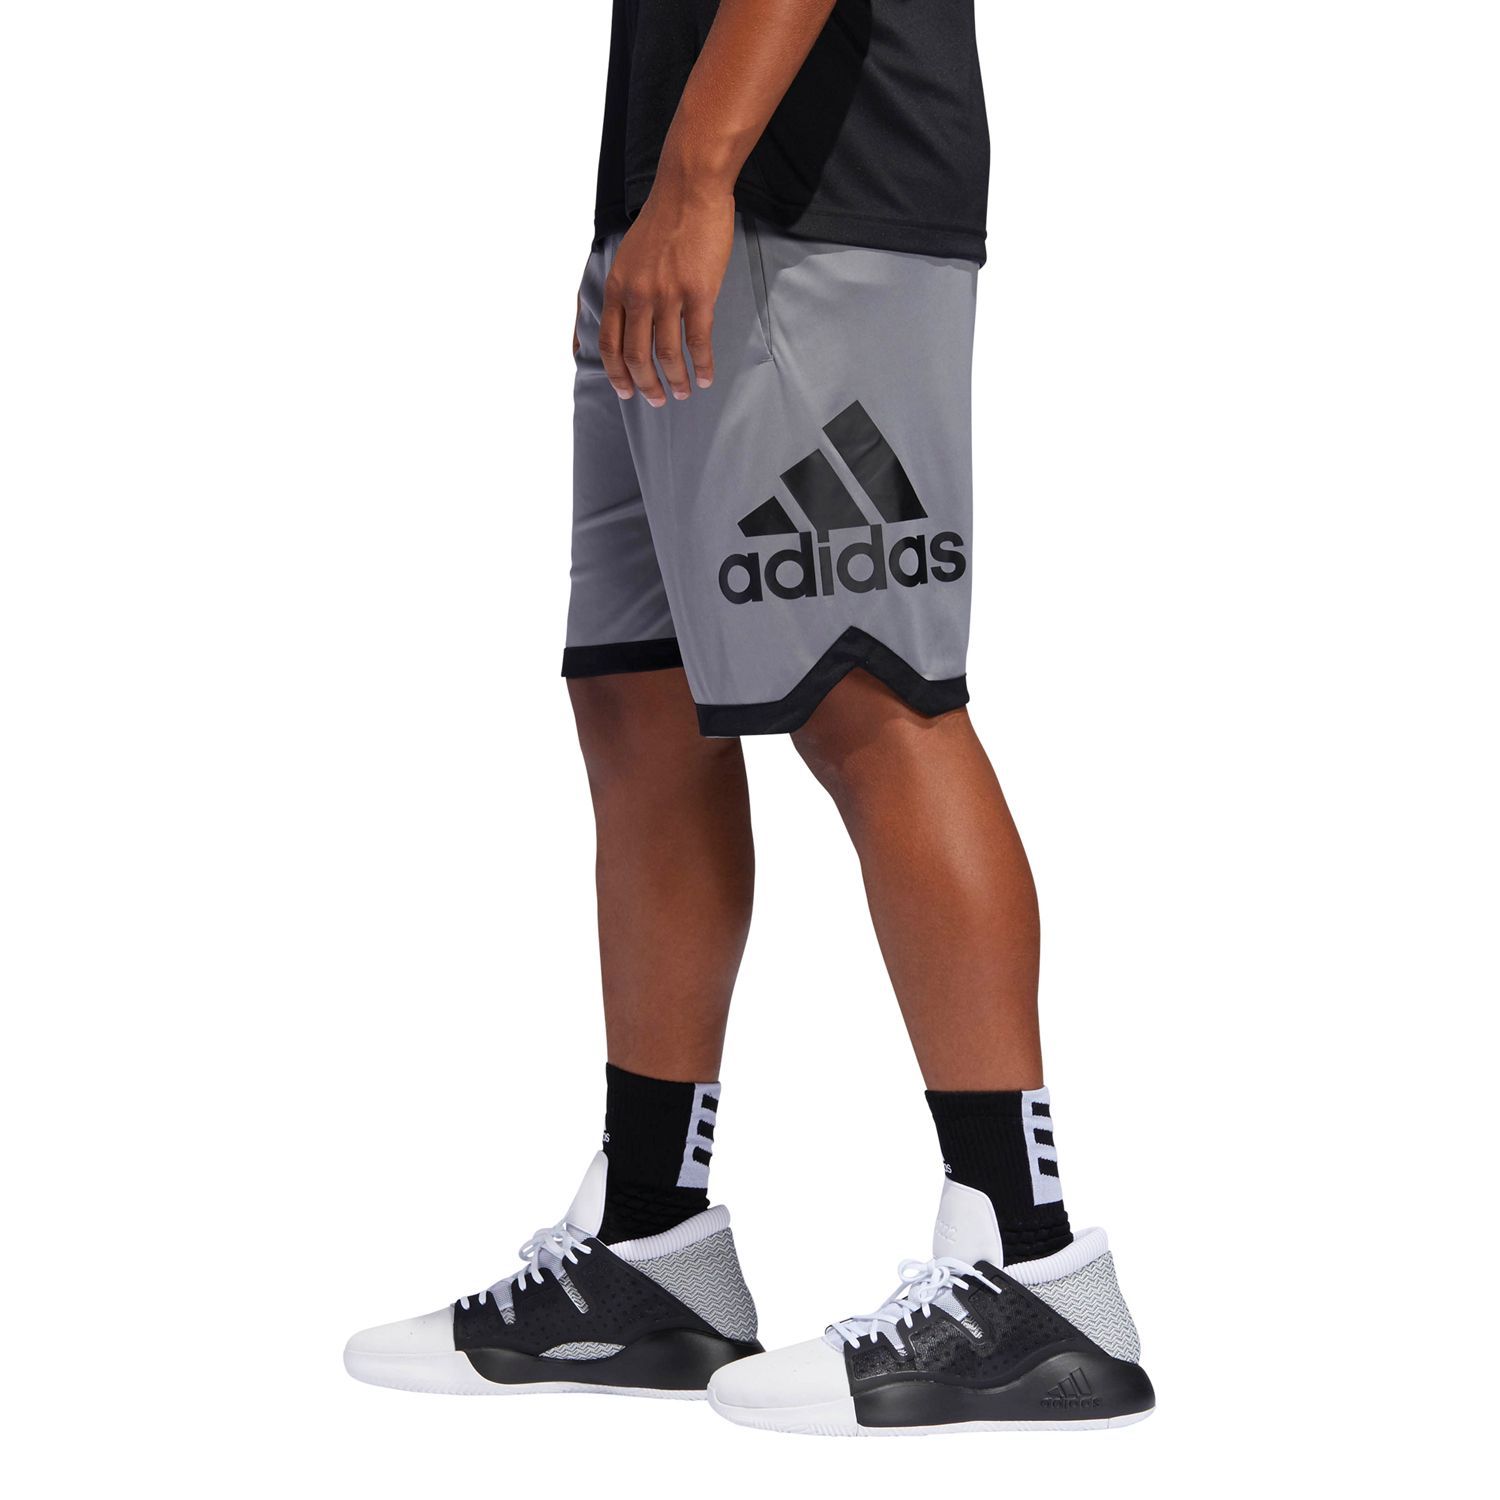 adidas basketball shorts for men